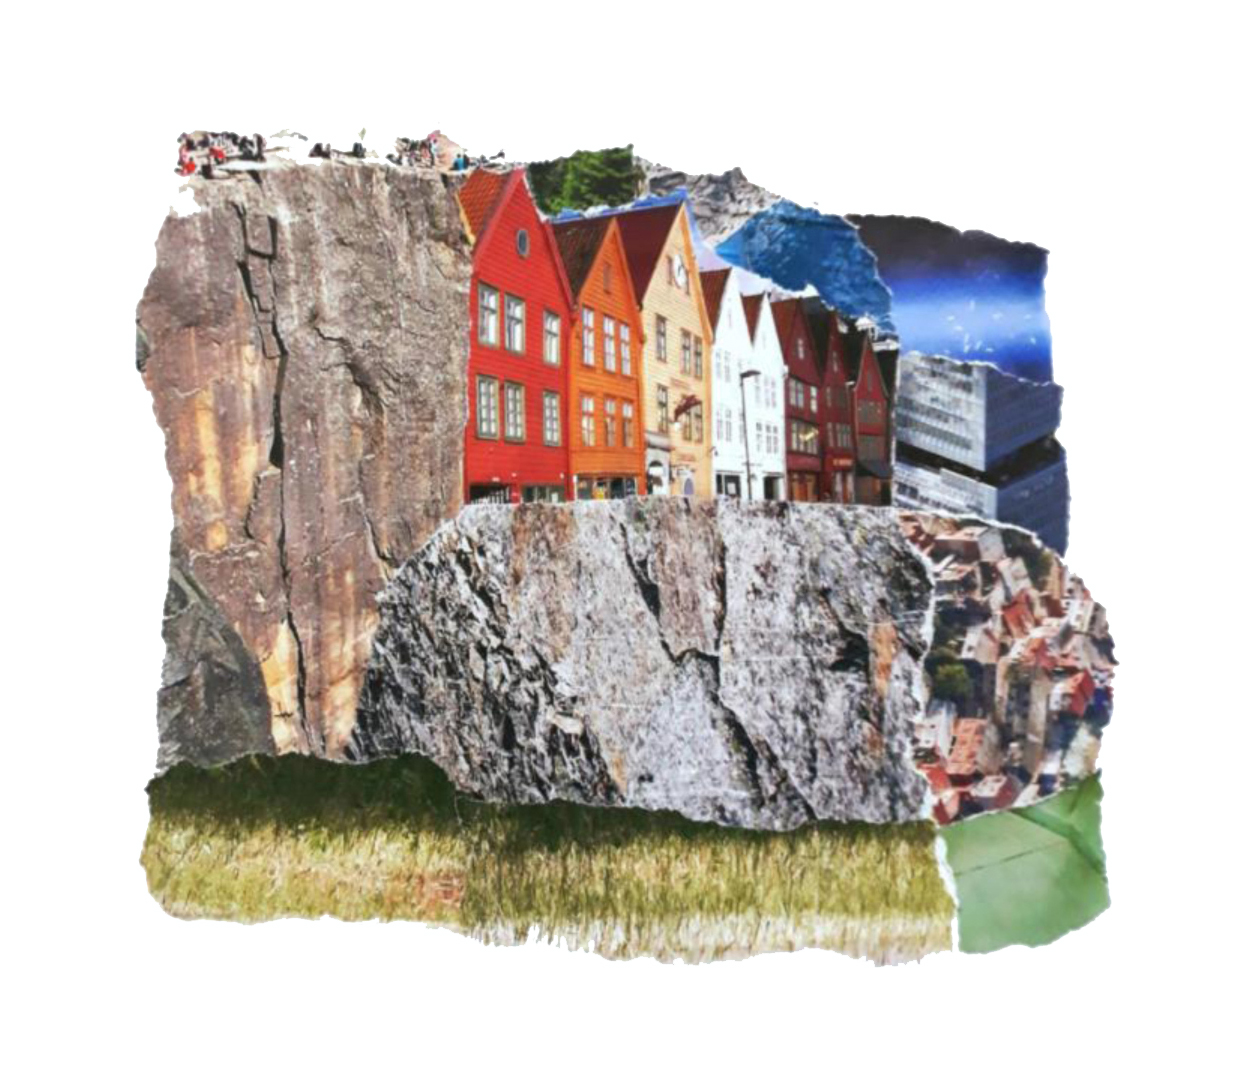 On the rocks, Papiercollage, 20 x 26 cm (inkl. Objektrahmen), 2019